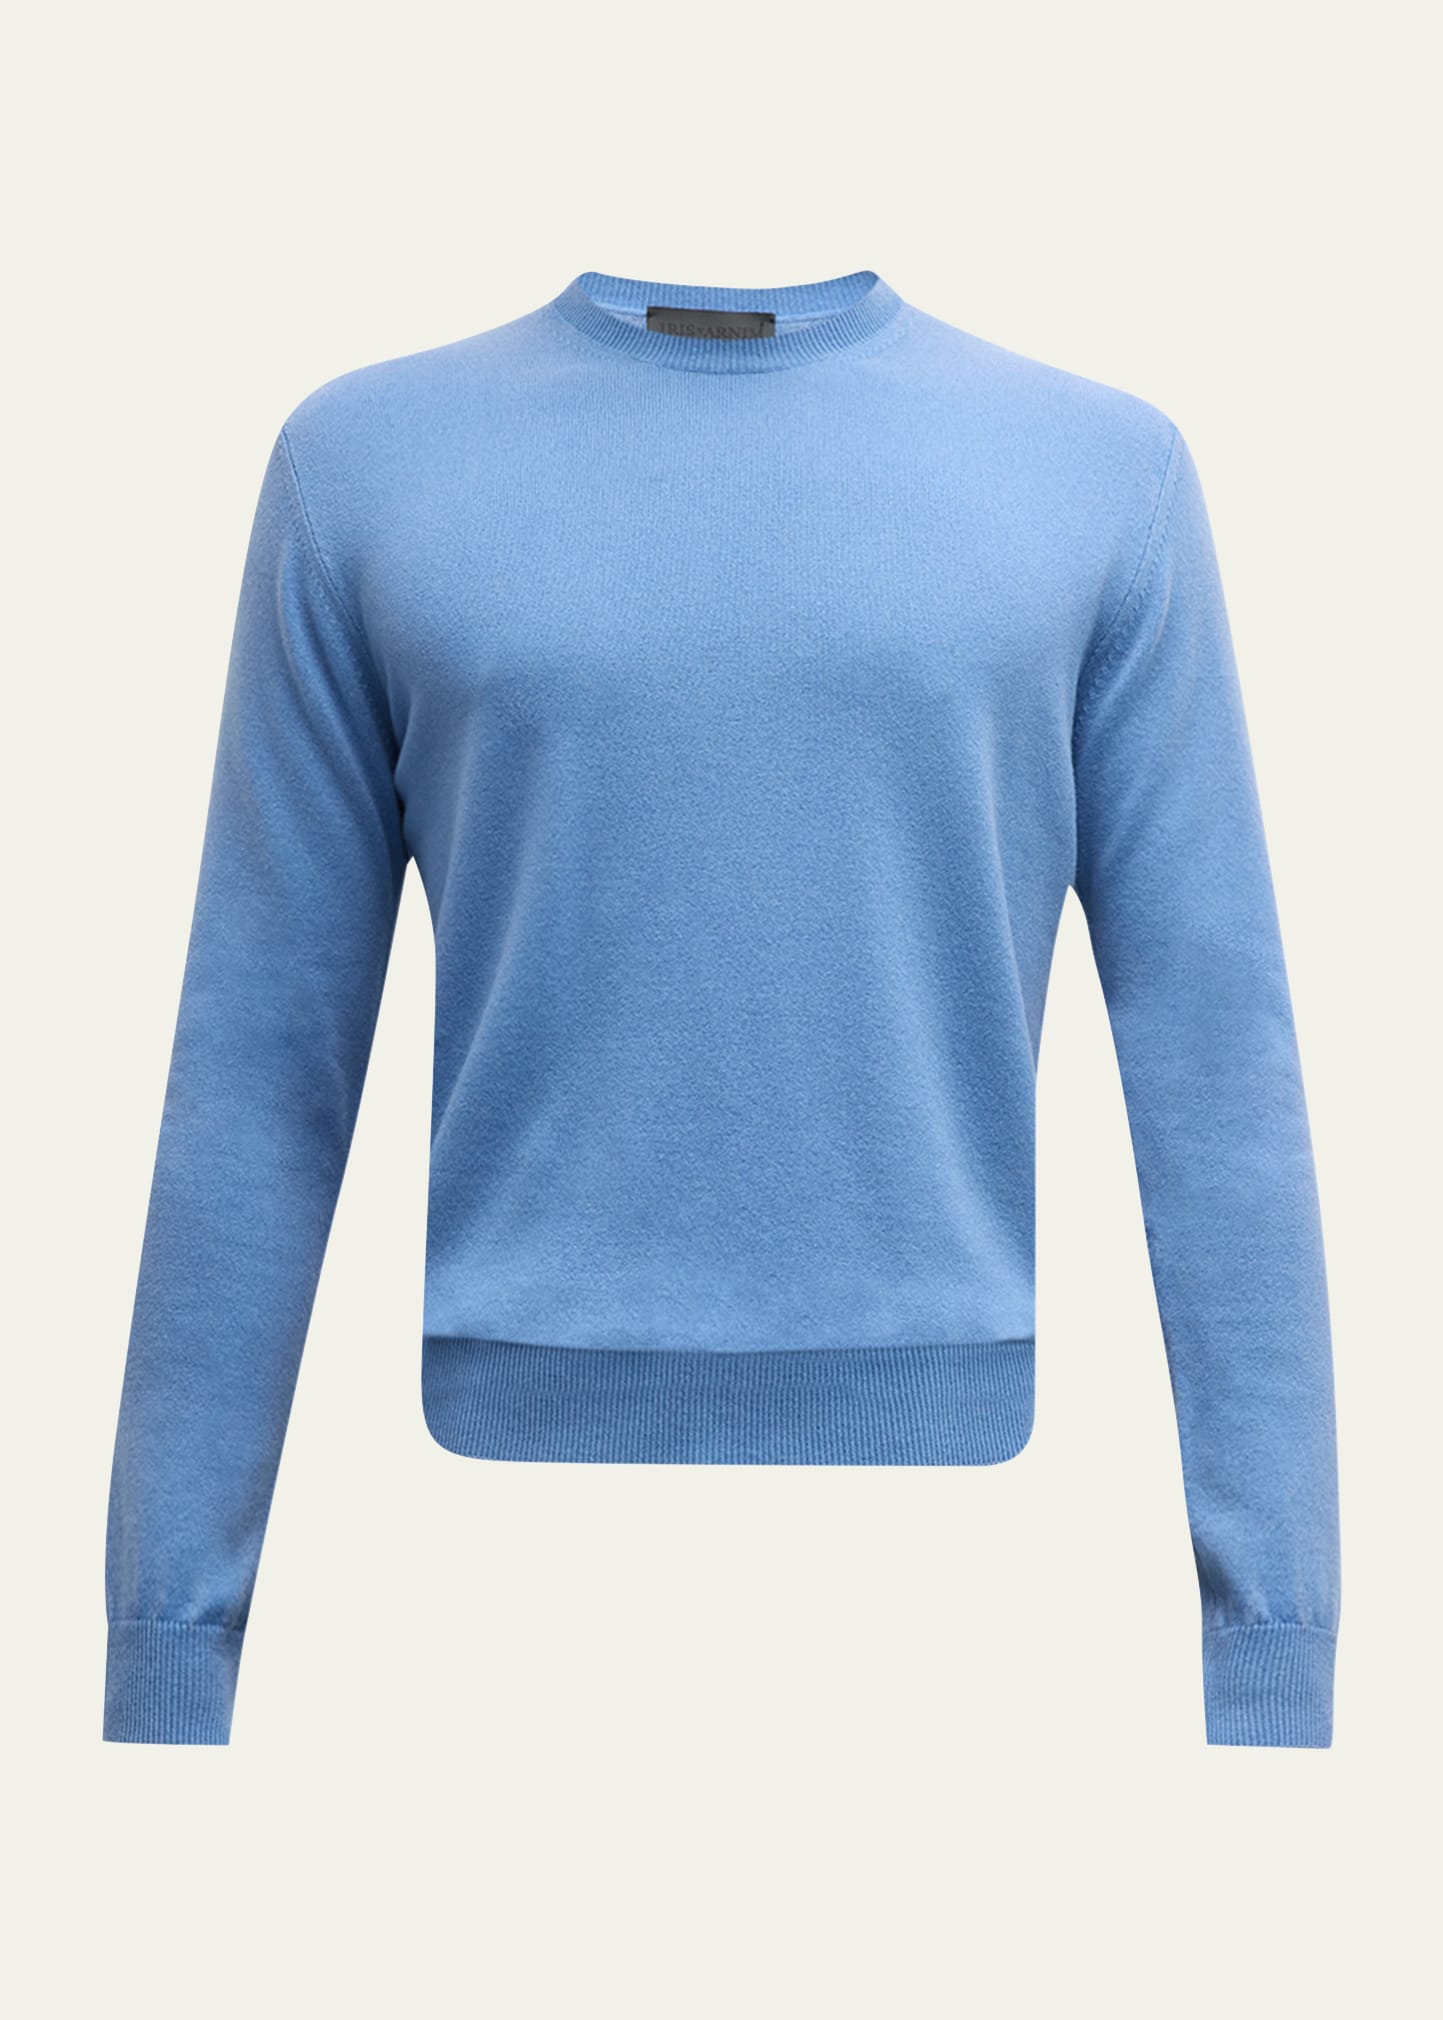 Men's Stonewashed Cashmere Crewneck Sweater